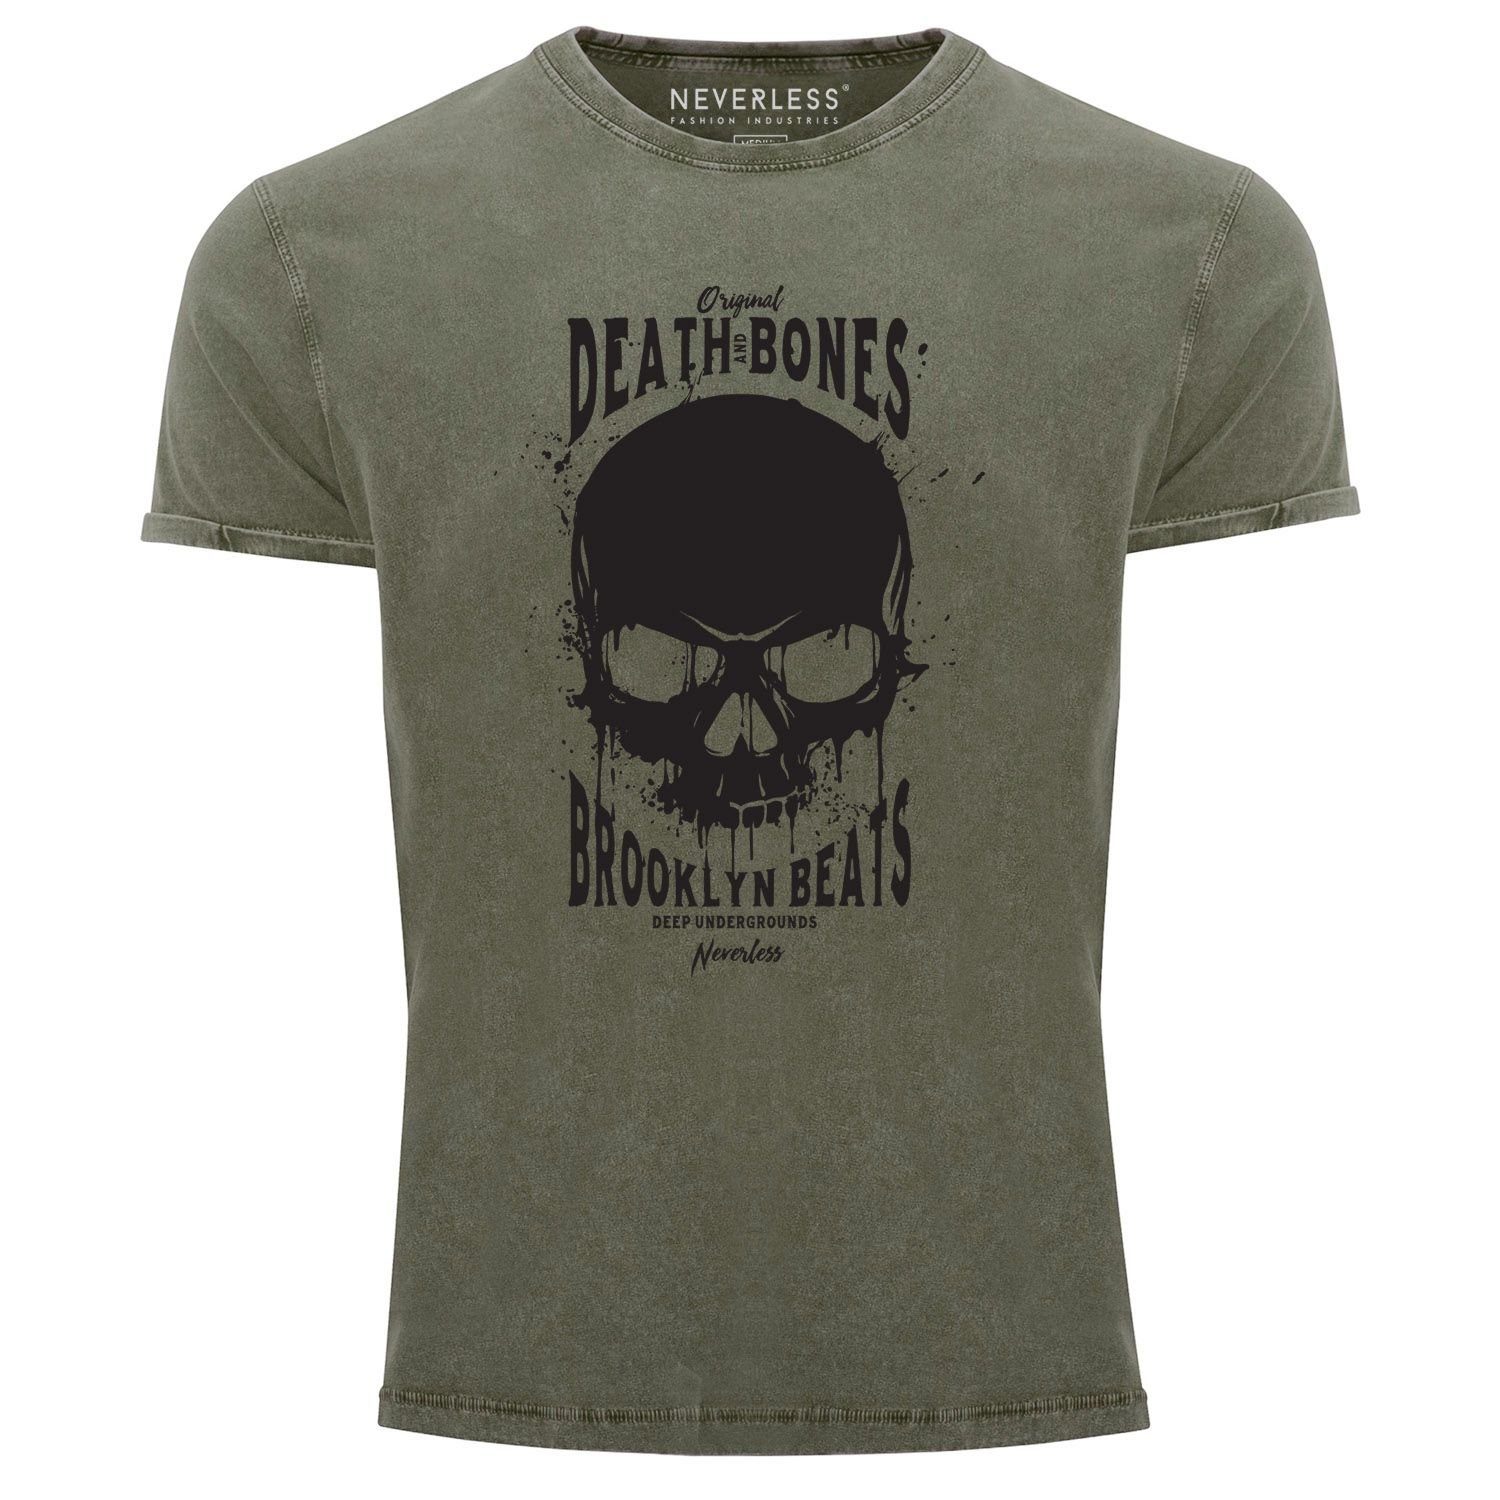 Neverless Print-Shirt Neverless® Herren Fit Bones oliv and Skull Shirt T-Shirt Vintage Aufdruck mit Look Print Used Printshirt Slim Death